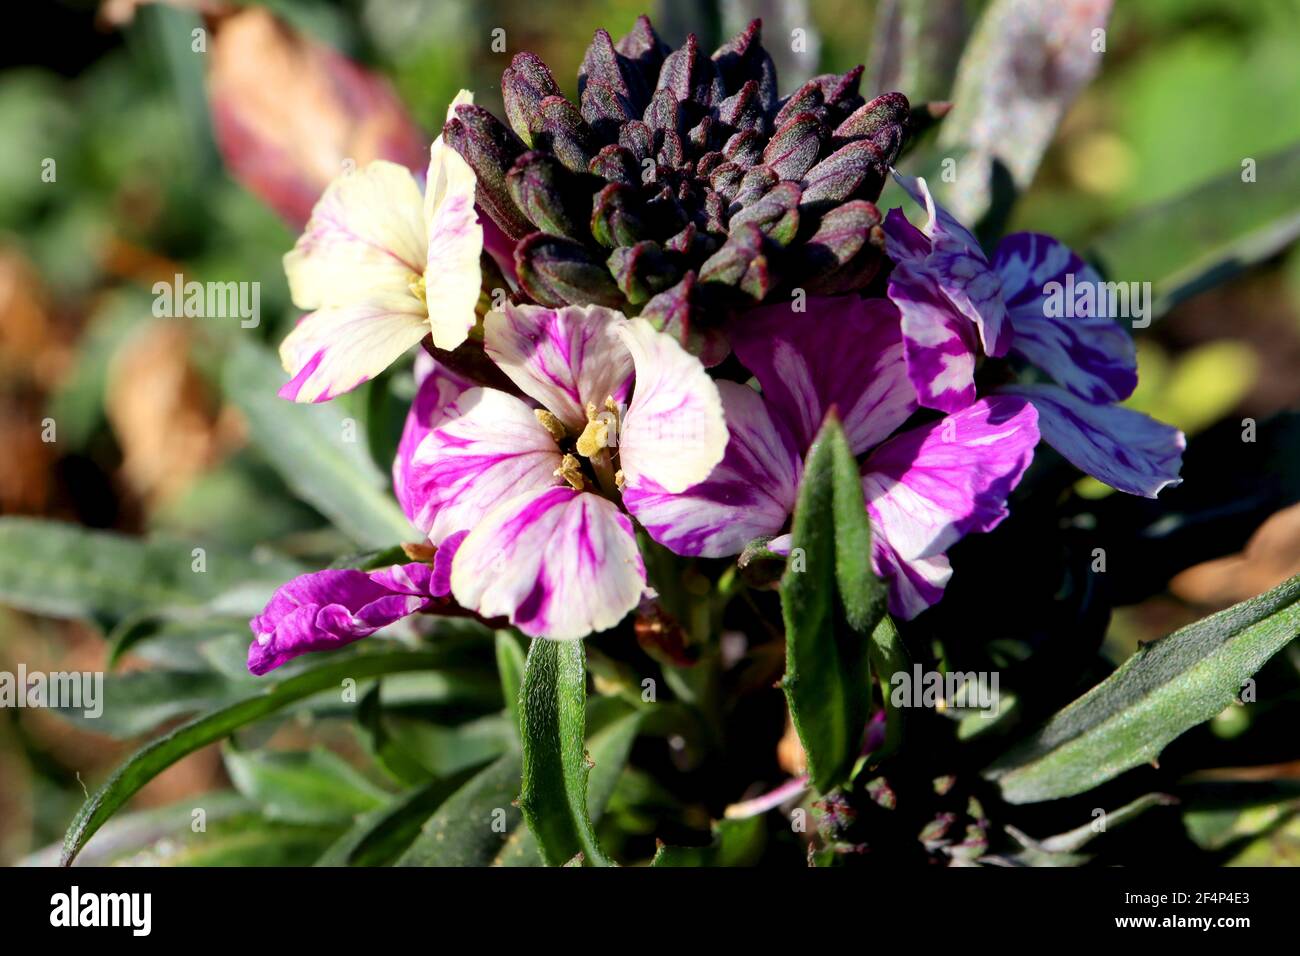 Erysimum cheiri ‘My Old Mum’ or ‘Devon Sunset’ Wallflower My Old Mum or Devon Sunset – white and yellow flowers streaked with purple, March, England, Stock Photo